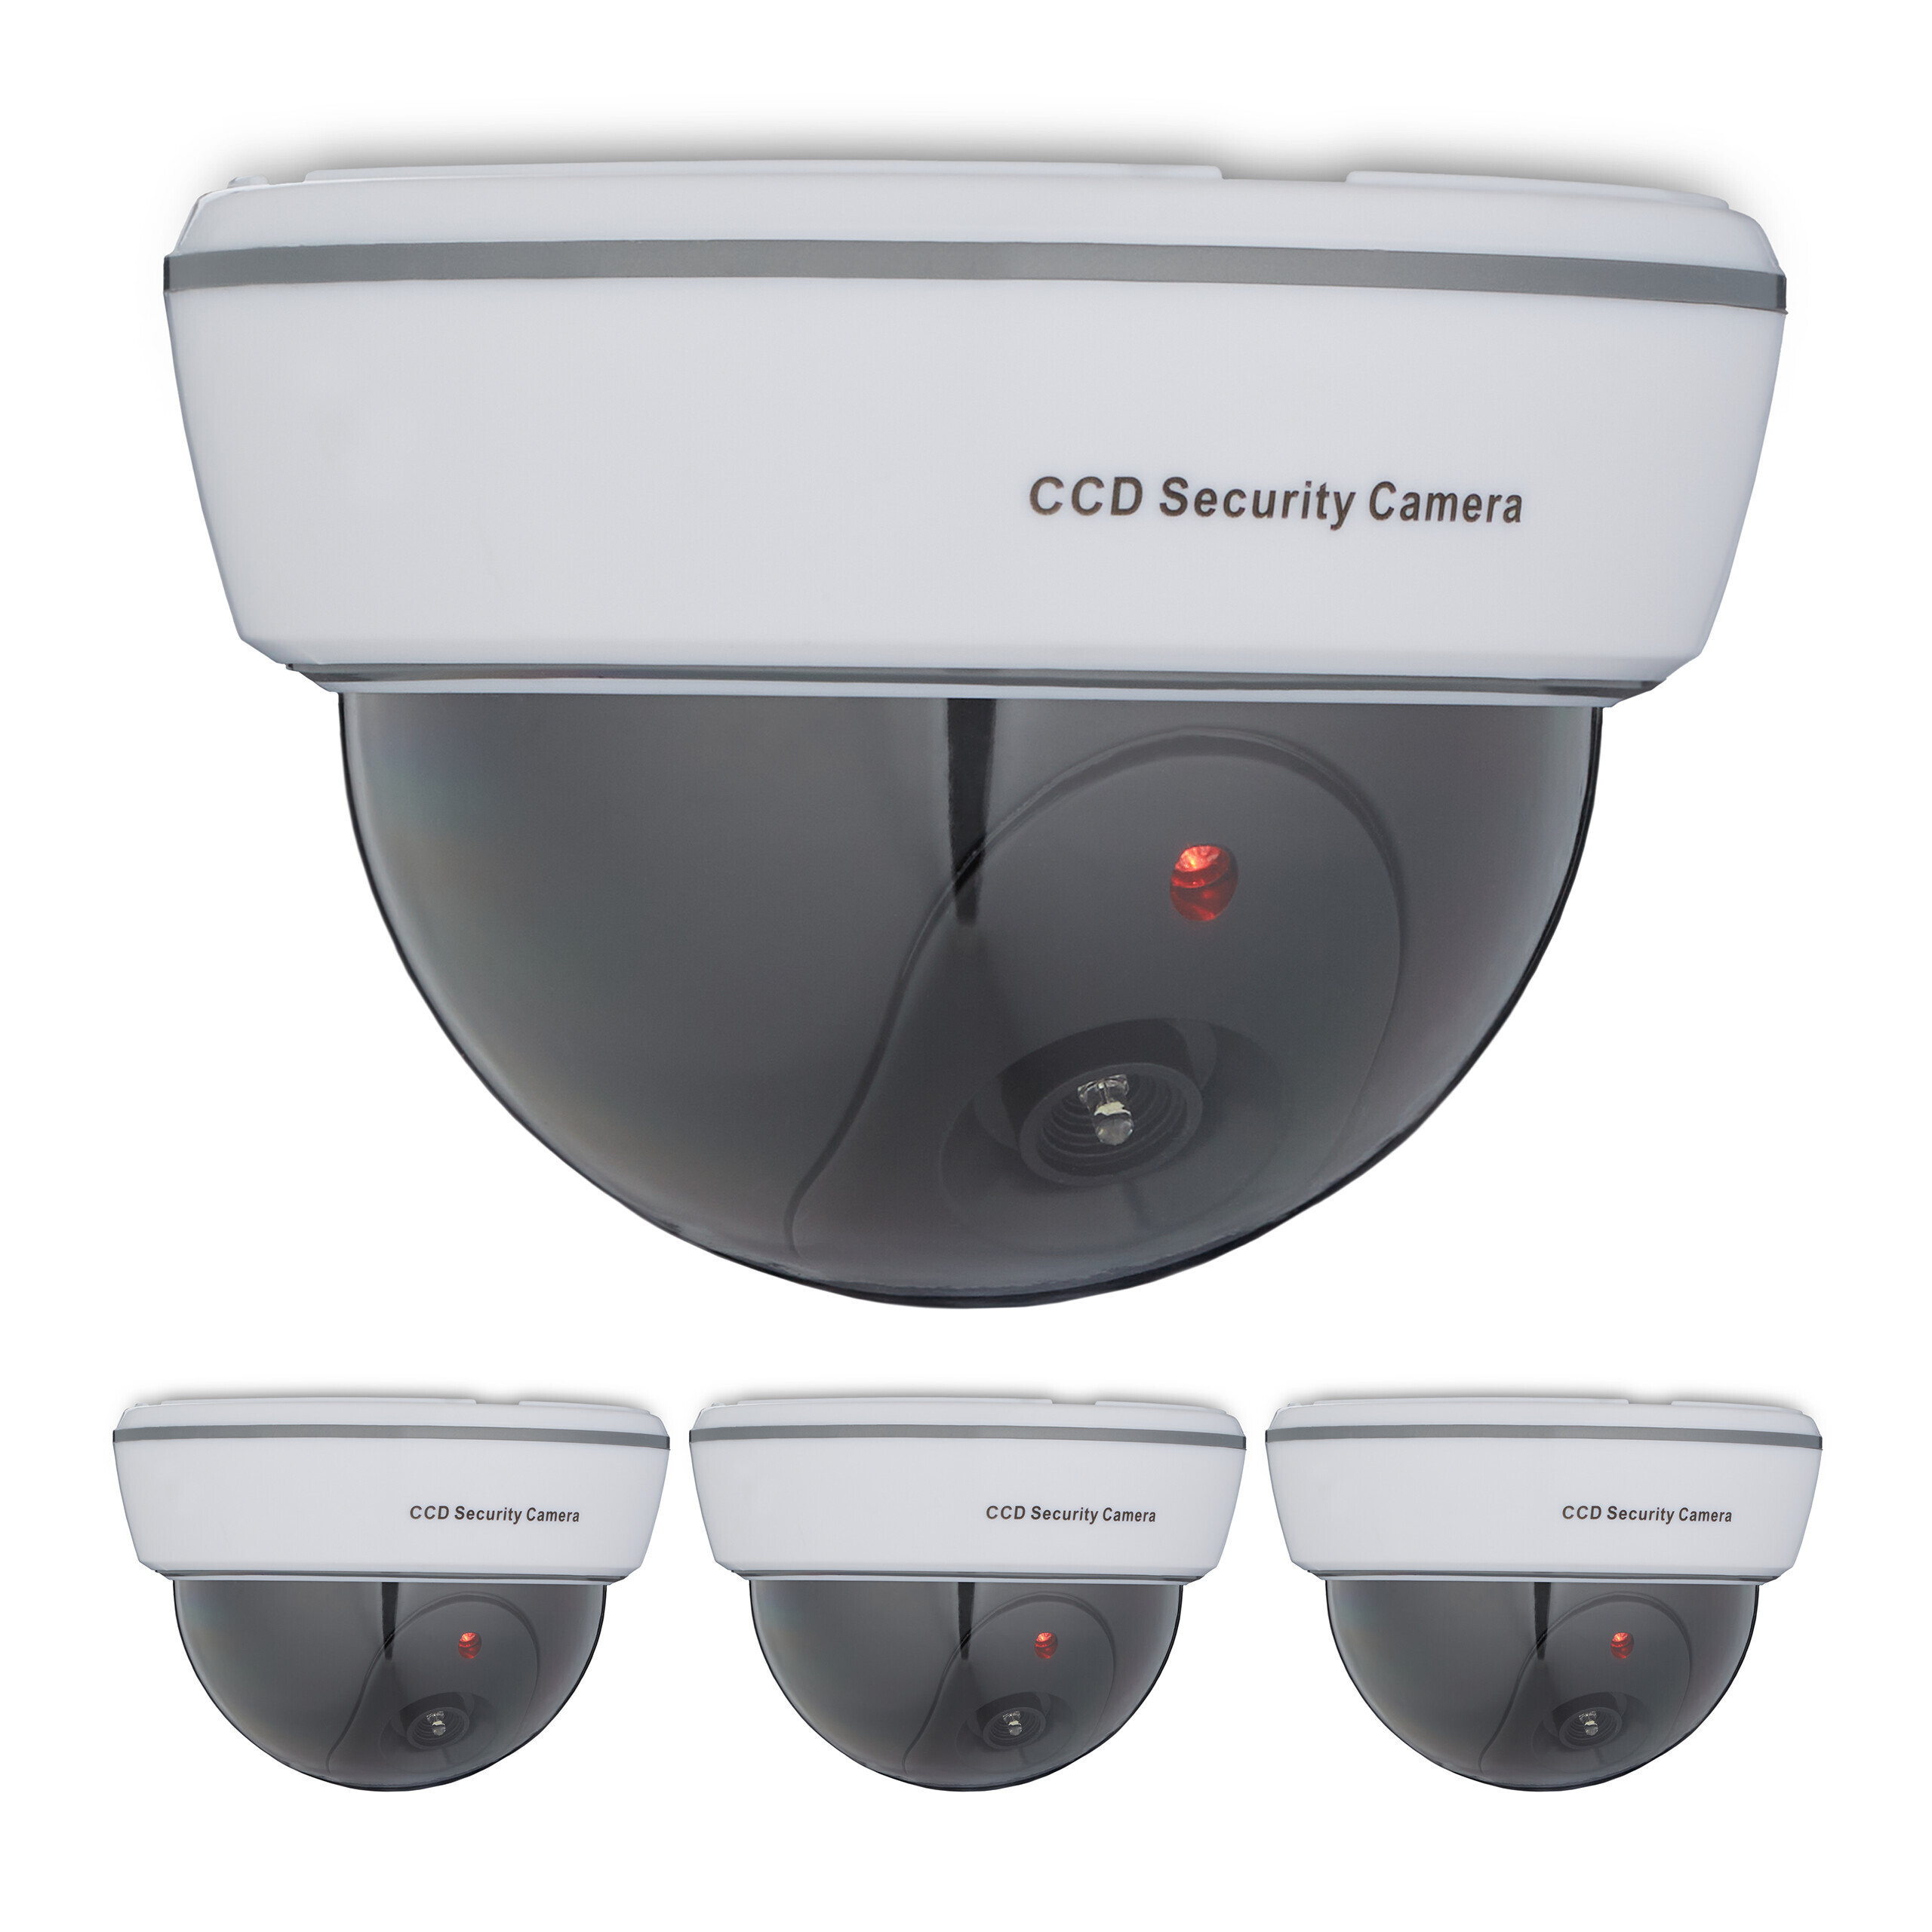 Dummy Überwachungskamera Kamera-Attrappe Blink-LED Alarmanlage Fake Camera  CCTV